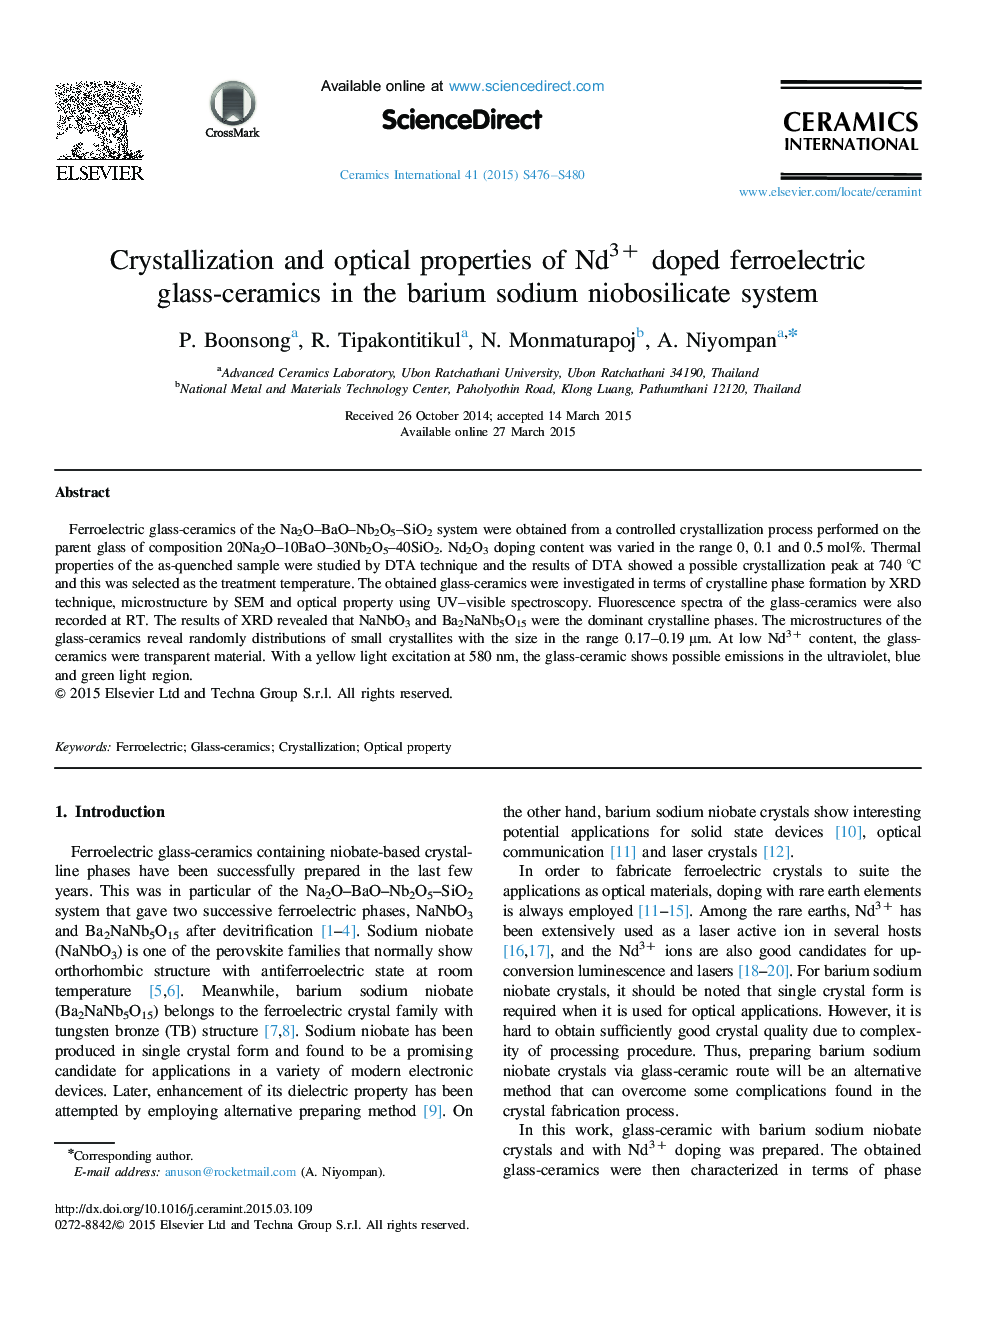 Crystallization and optical properties of Nd3+ doped ferroelectric glass-ceramics in the barium sodium niobosilicate system